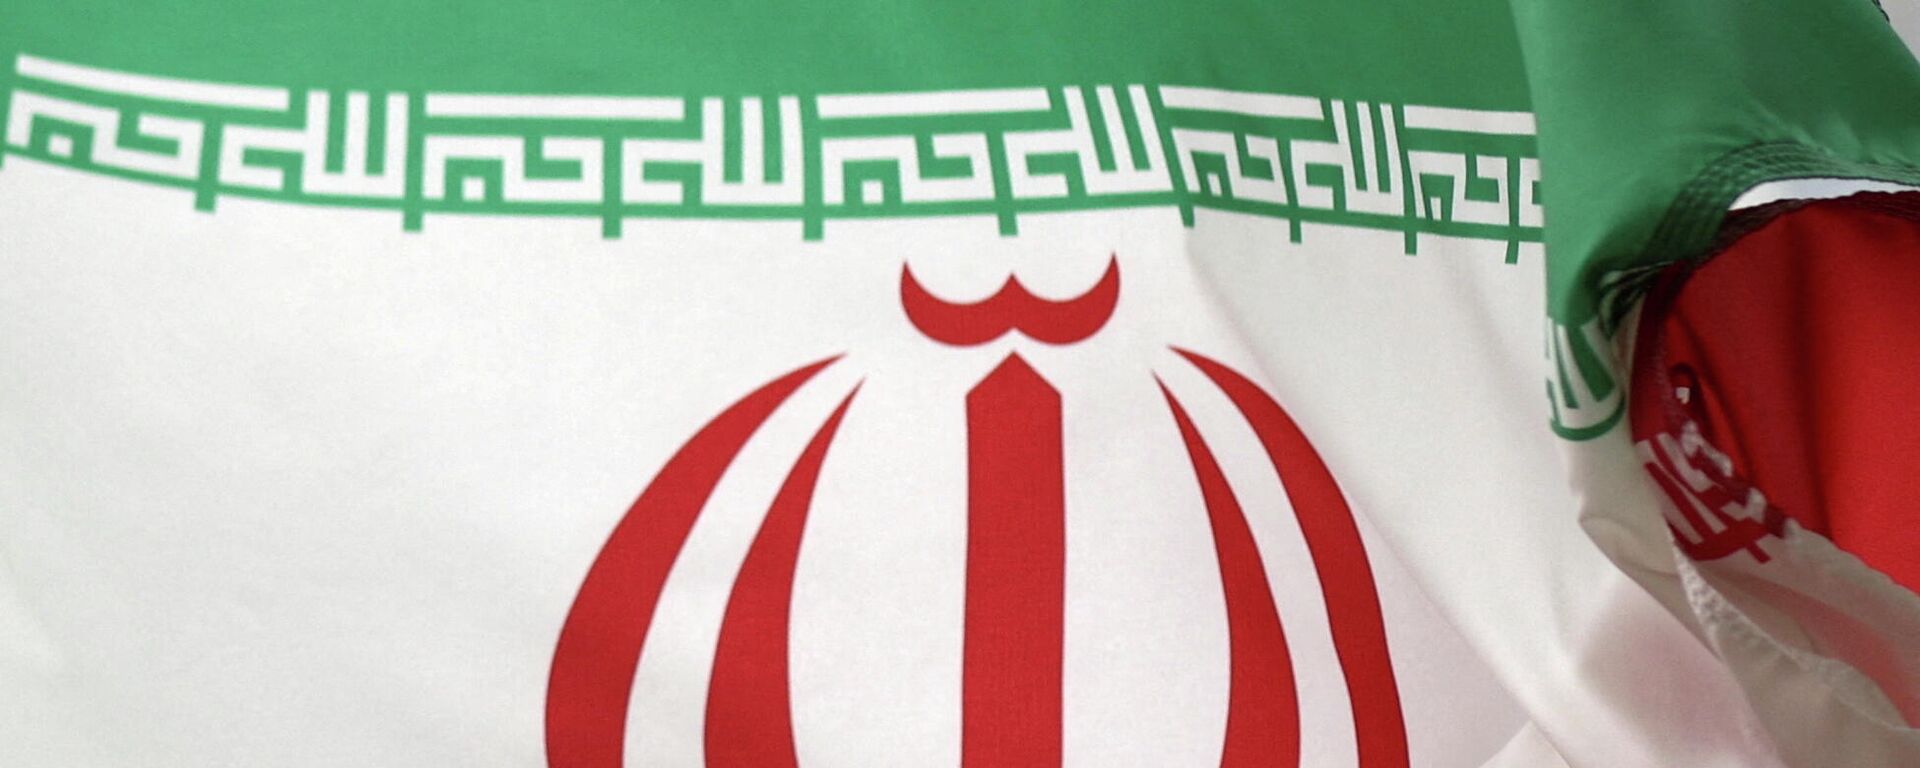 La bandera de Irán - Sputnik Mundo, 1920, 20.12.2021